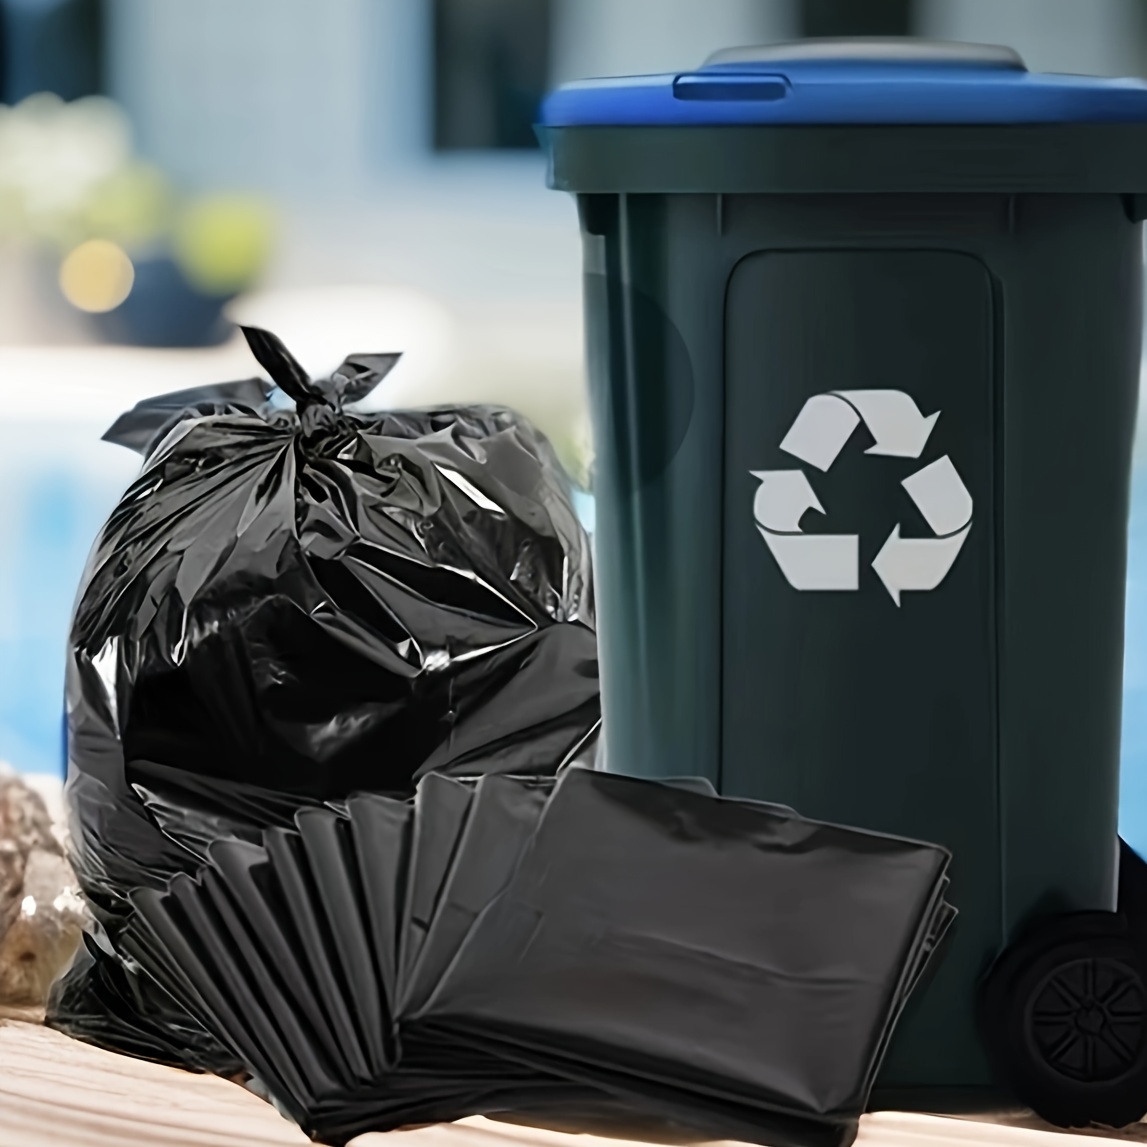 120pcs Heavy Duty Trash Bags 33 Gallon Black Large Garbage Rubbish Bags  Home